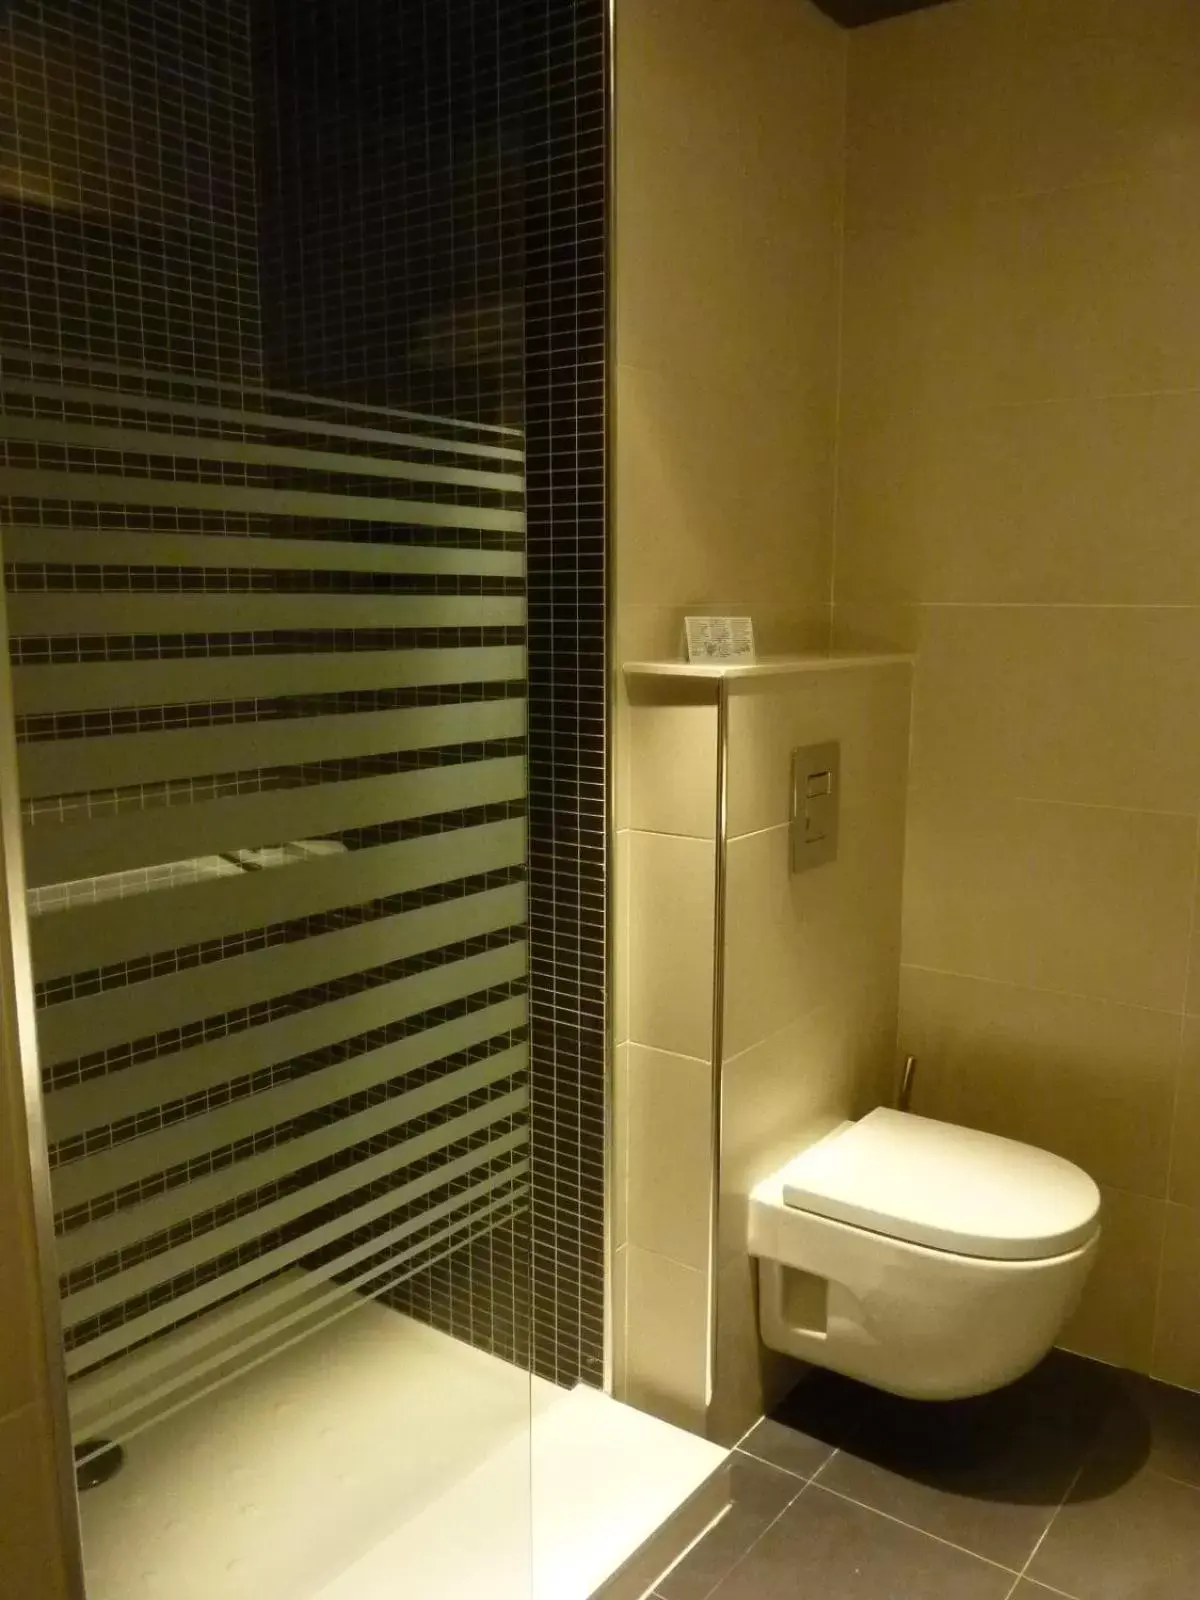 Bathroom in Barcelona House